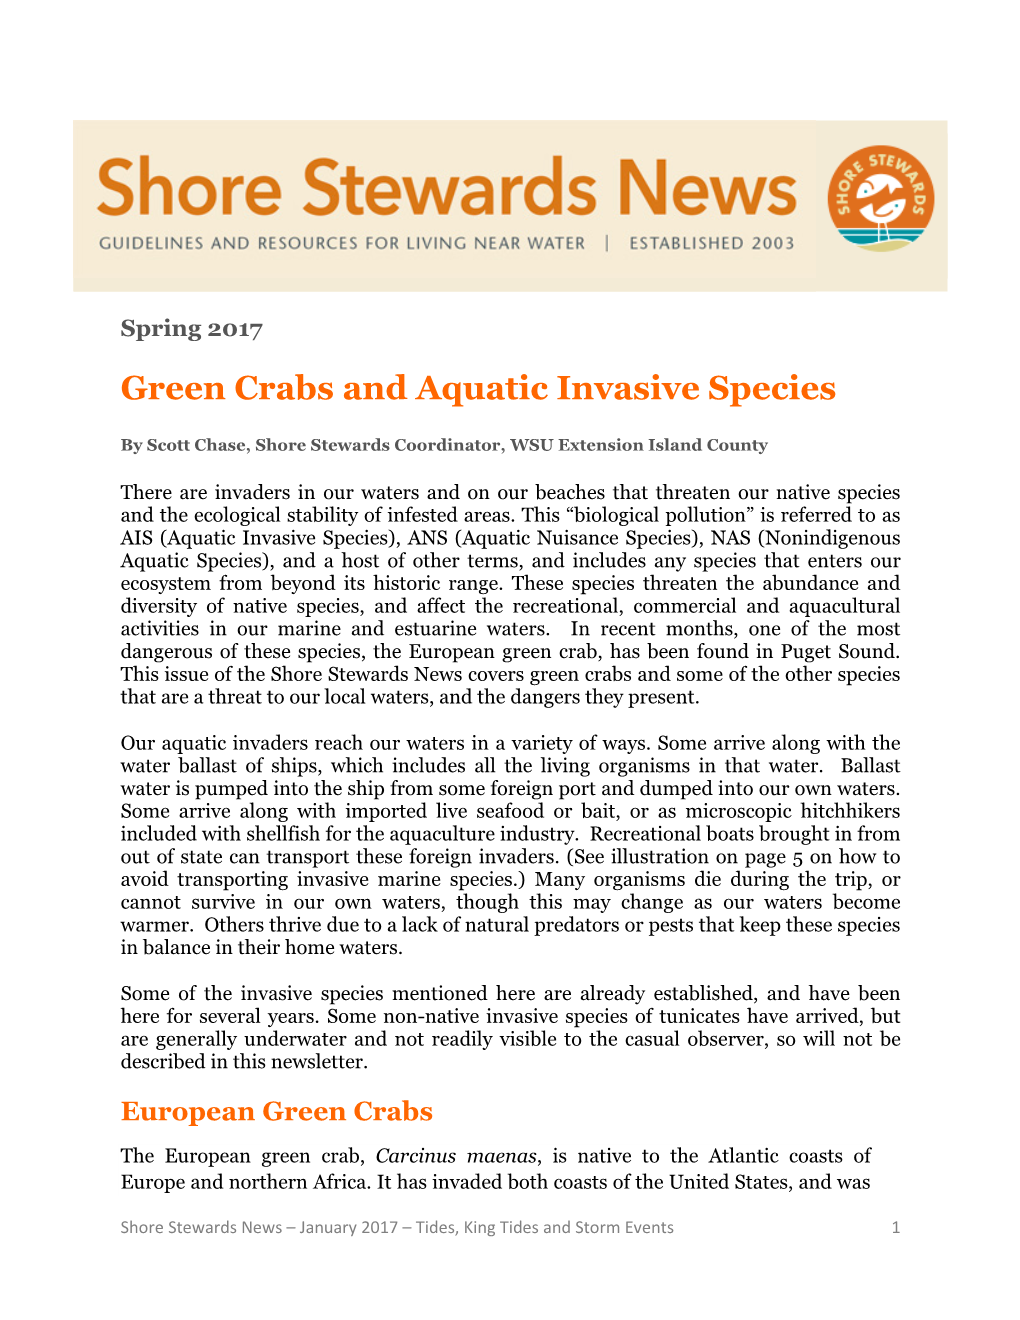 Spring 2017 – Green Crabs and Aquatic Invasive Species